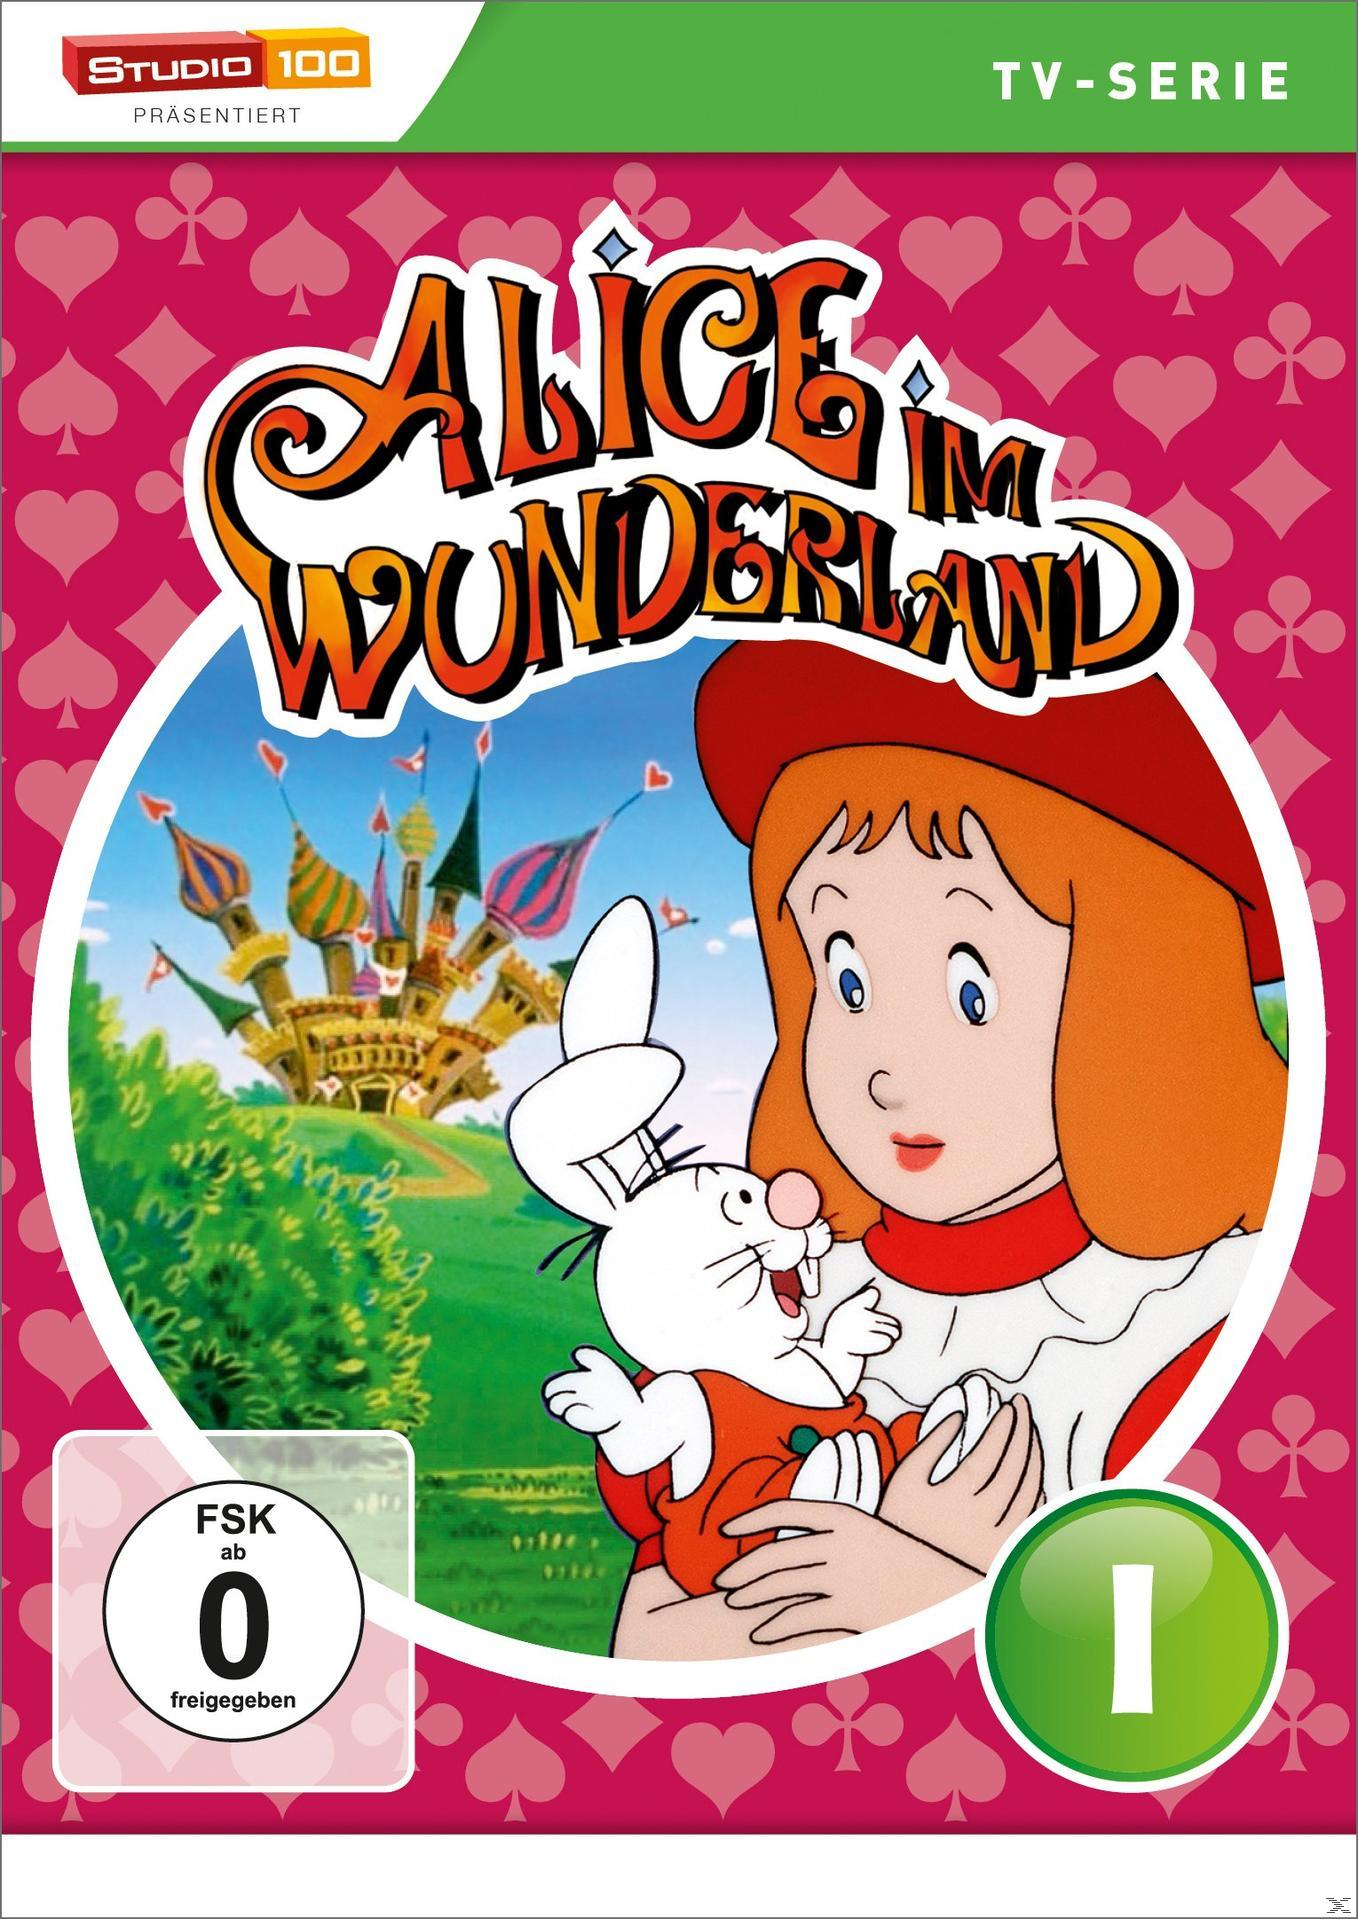 1 - Alice DVD Teil im Wunderland